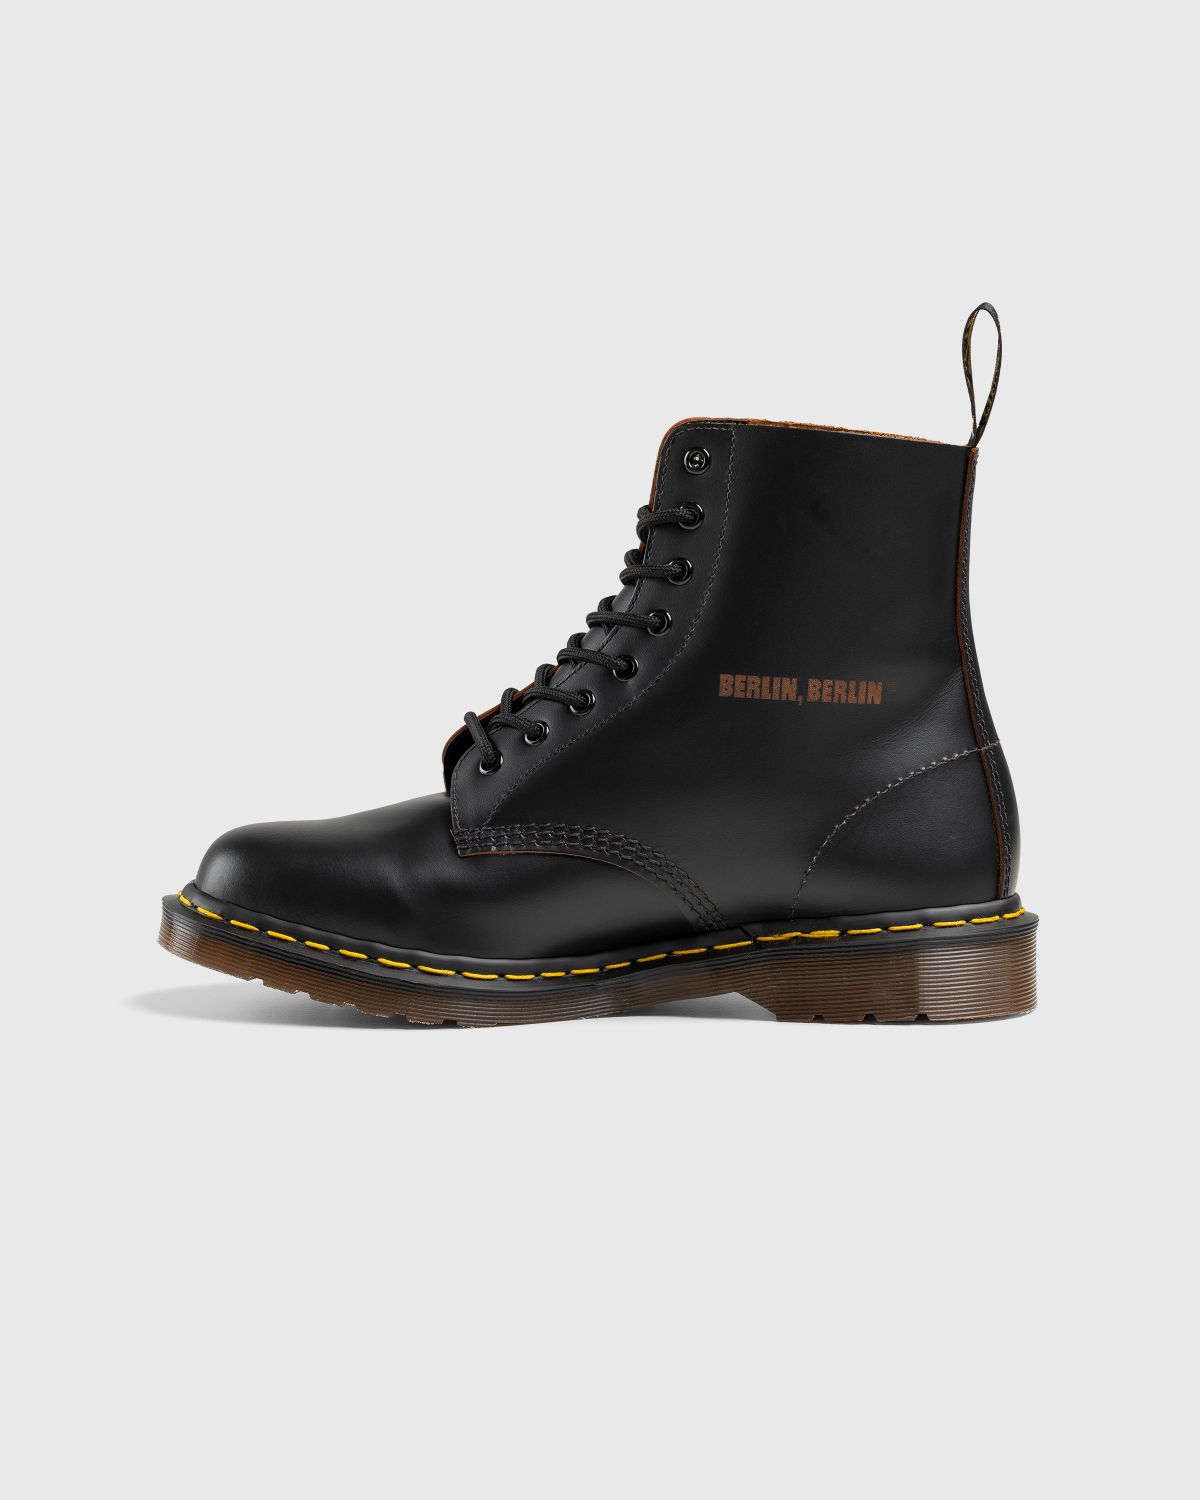 Dr. Martens x Highsnobiety – 1460 Vintage BERLIN, BERLIN 3 Black - Laced Up Boots - Black - Image 2